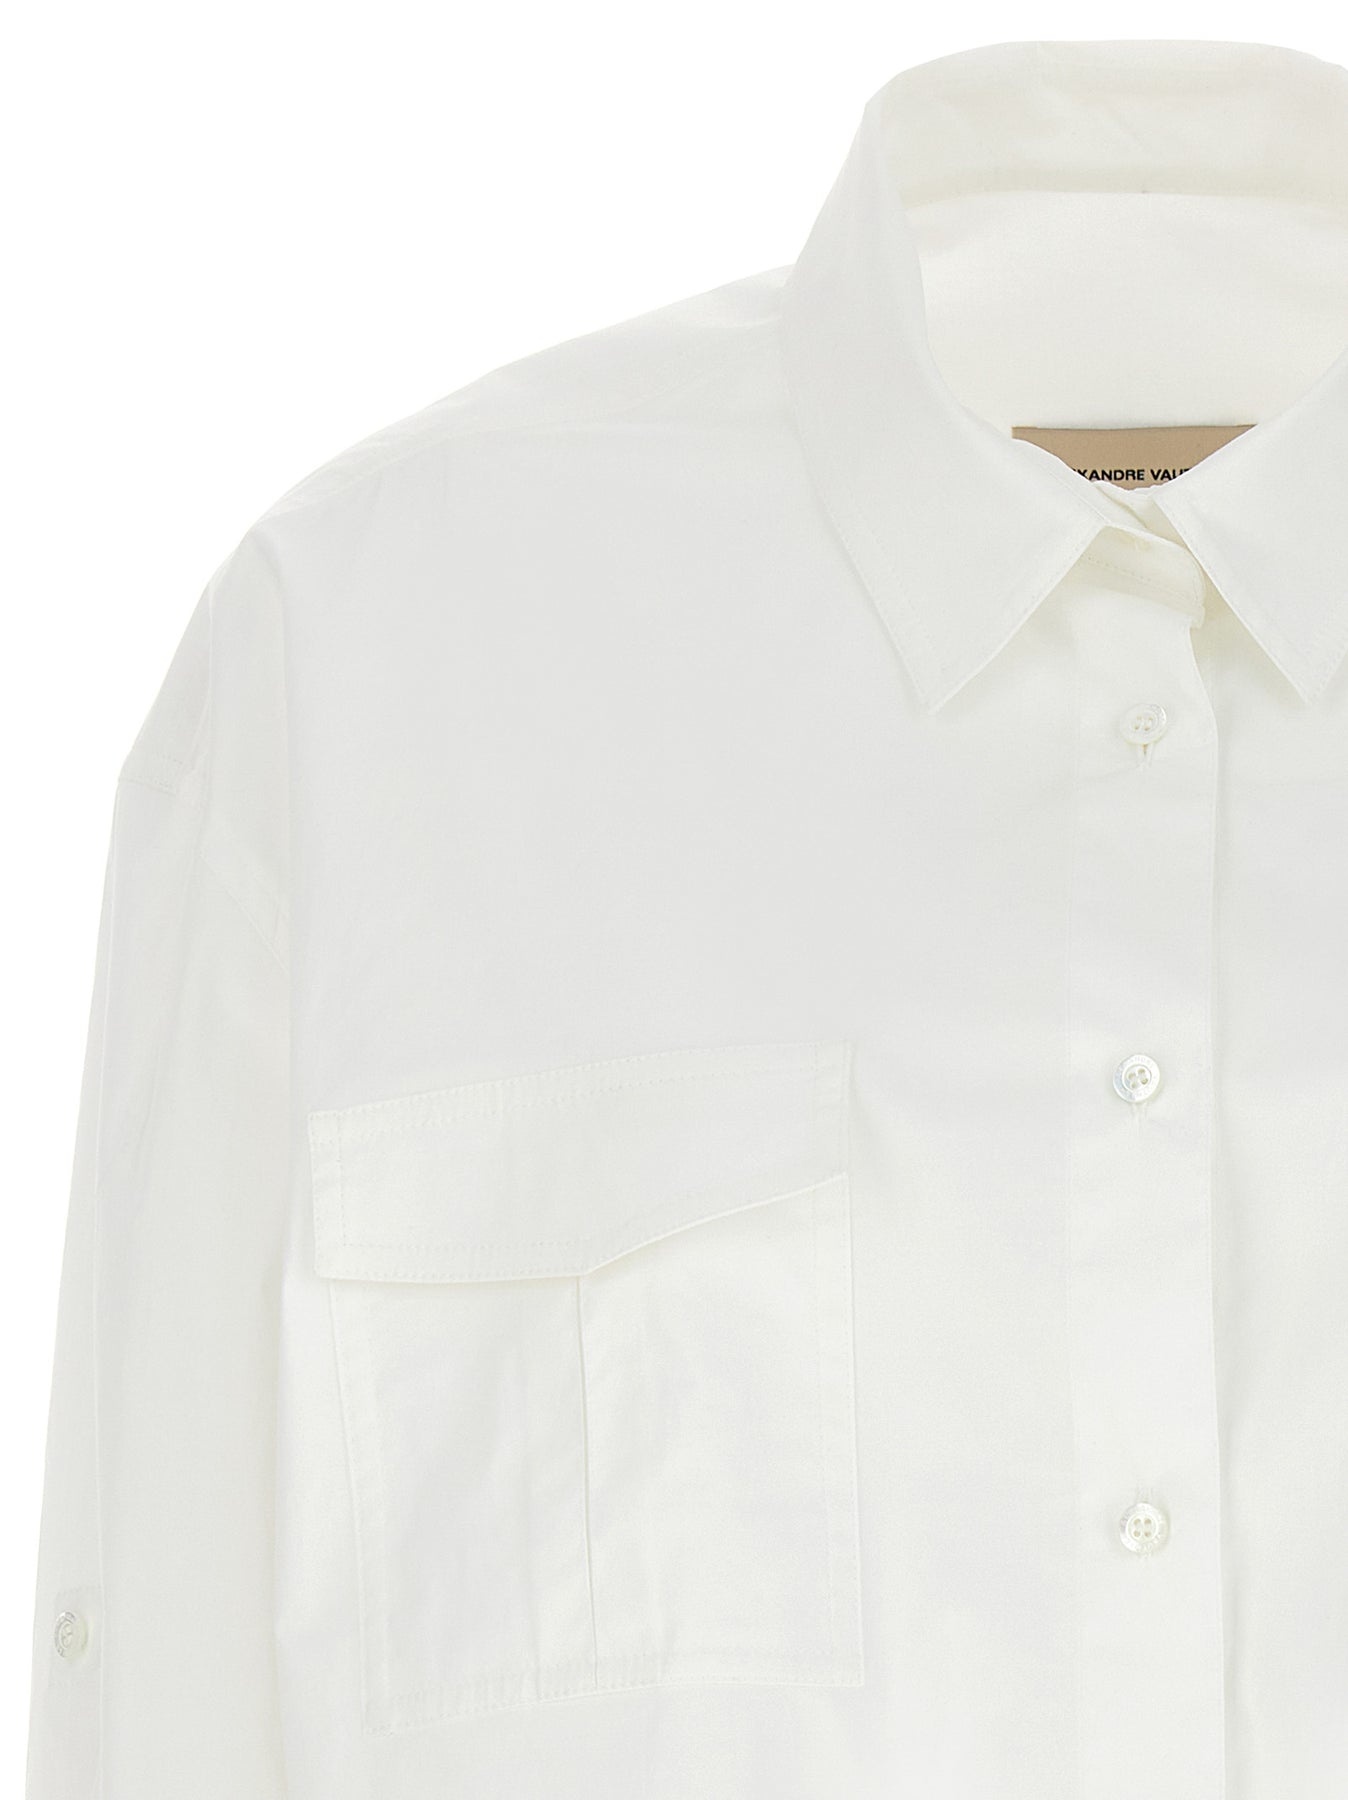 Pocket Shirt Shirt, Blouse White - 3